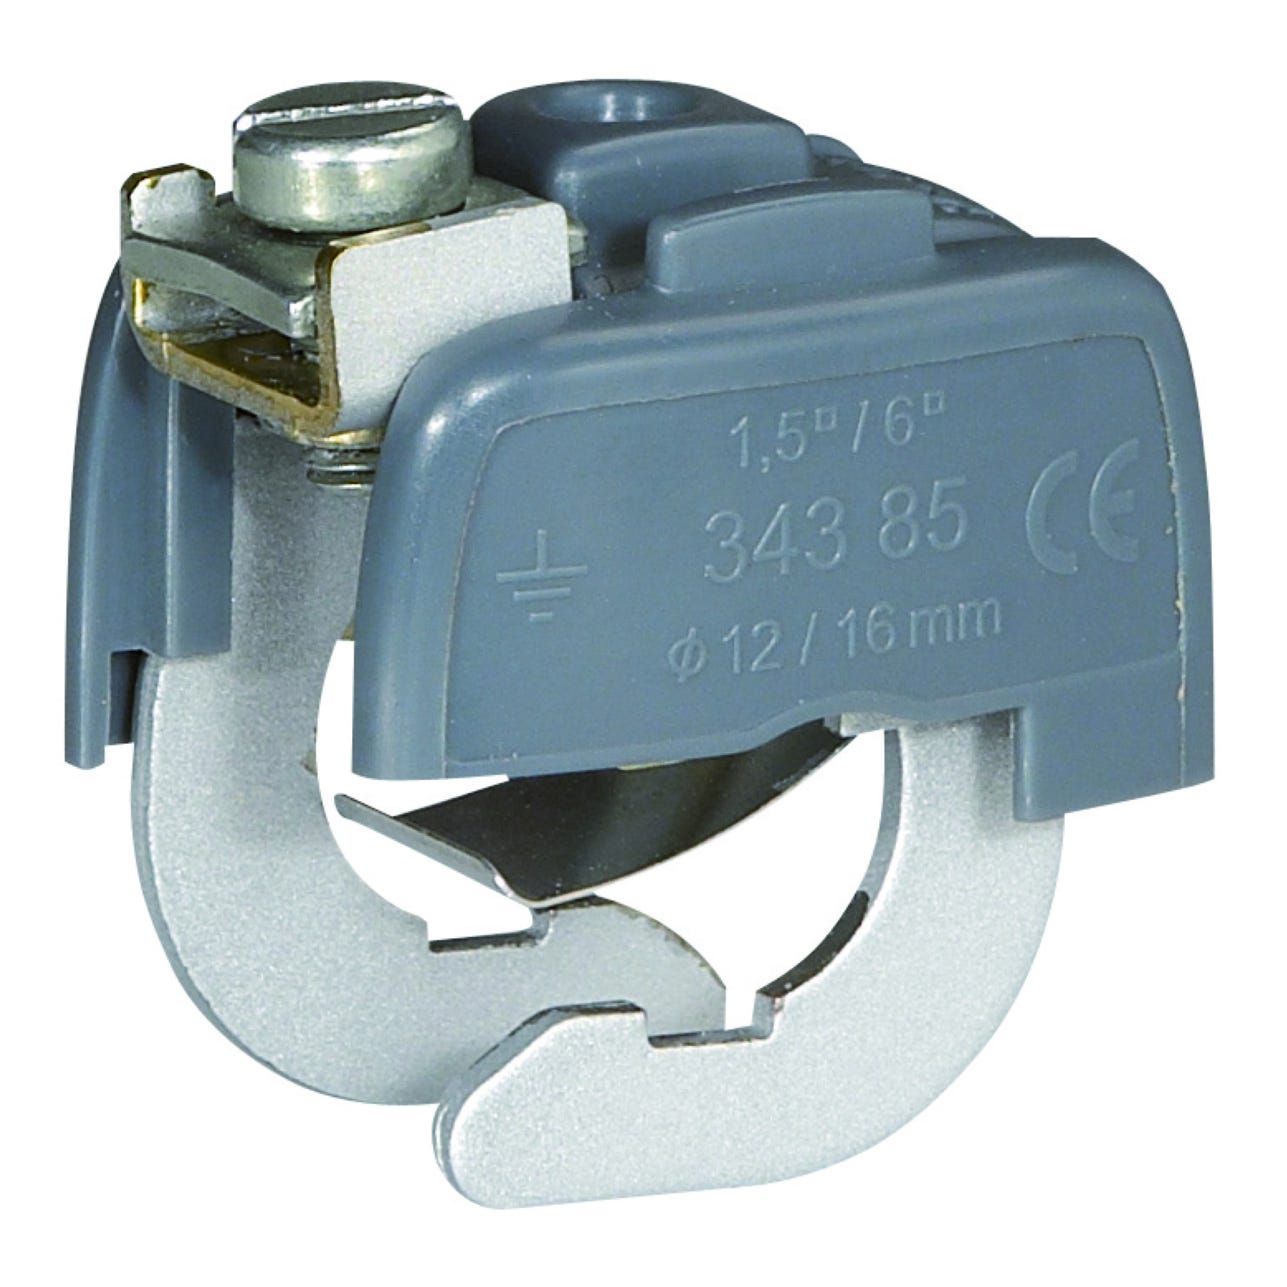 Connecteur de Liaison equipotentielle Diam. Mini 28 mm domino Diam. Maxi 32 mm Legrand 0